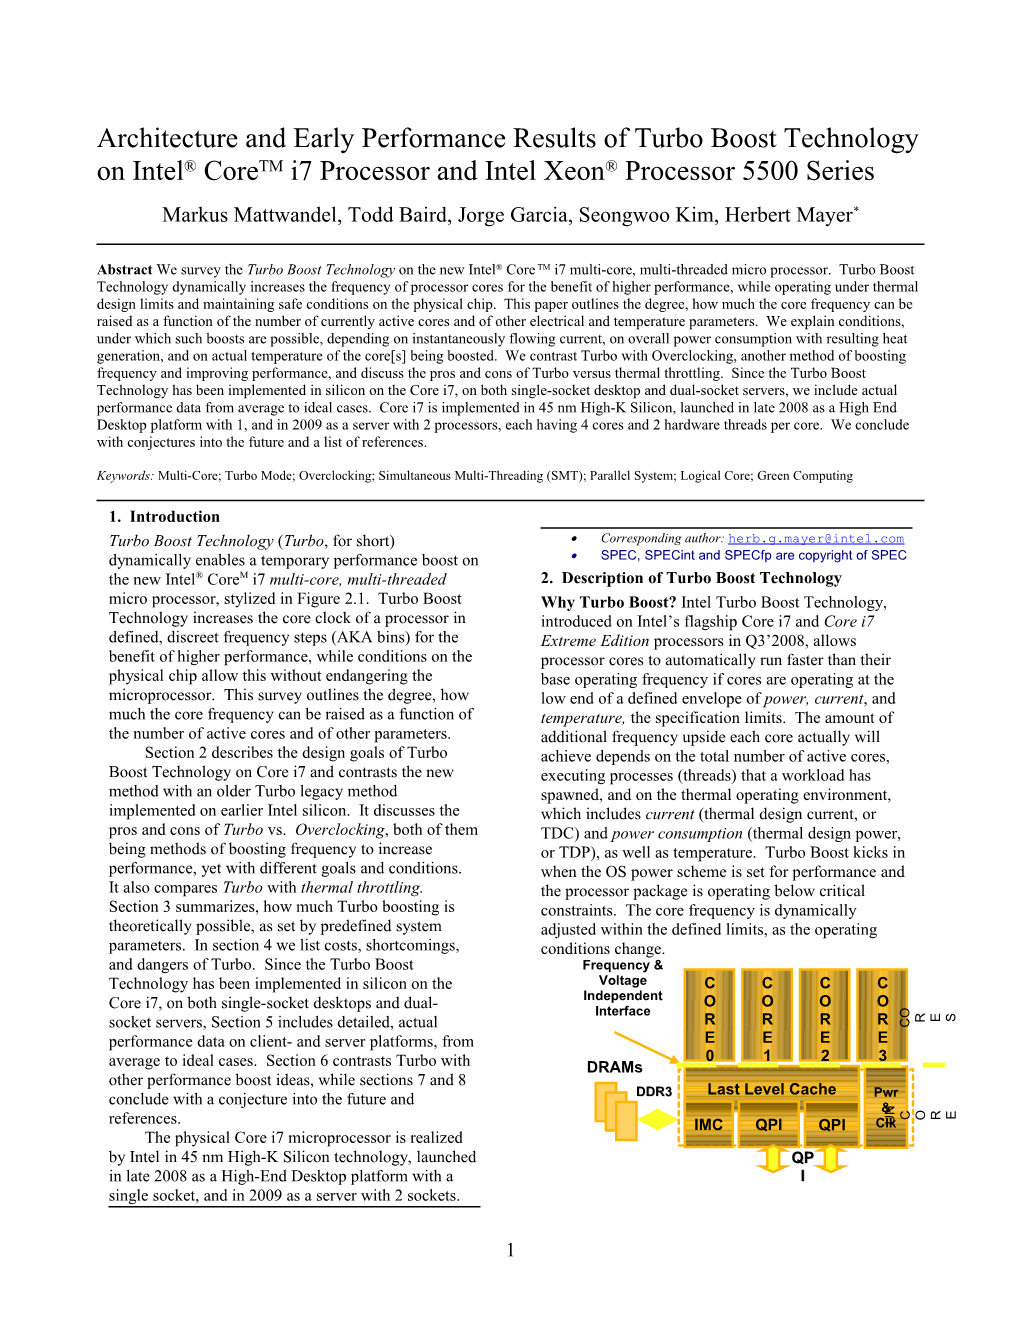 Performance Gains on the New Multi-Core, Multi-Threaded Intel Core I7 Microprocessor